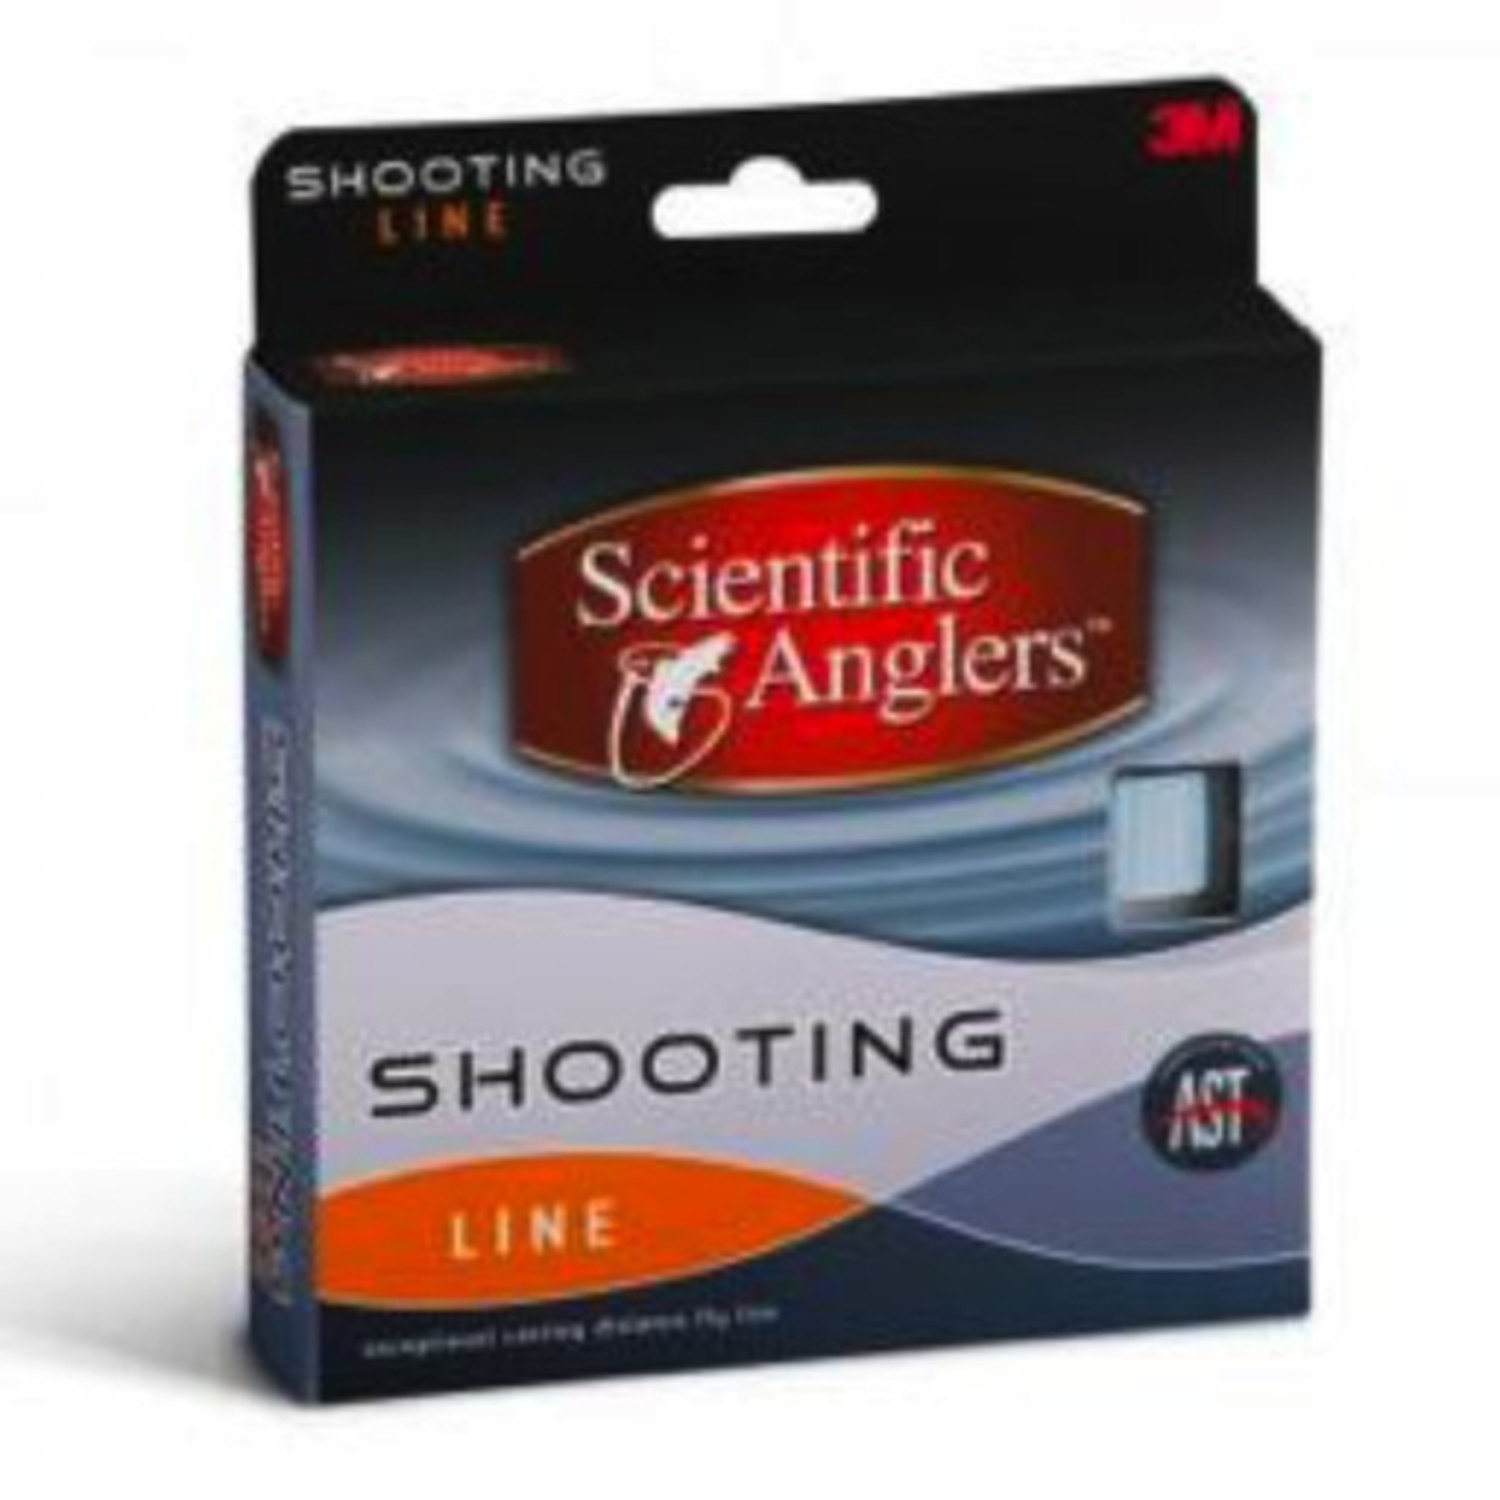 https://cdn.shoplightspeed.com/shops/618341/files/10356313/1500x4000x3/scientific-angler-scientific-anglers-mastery-shoot.jpg